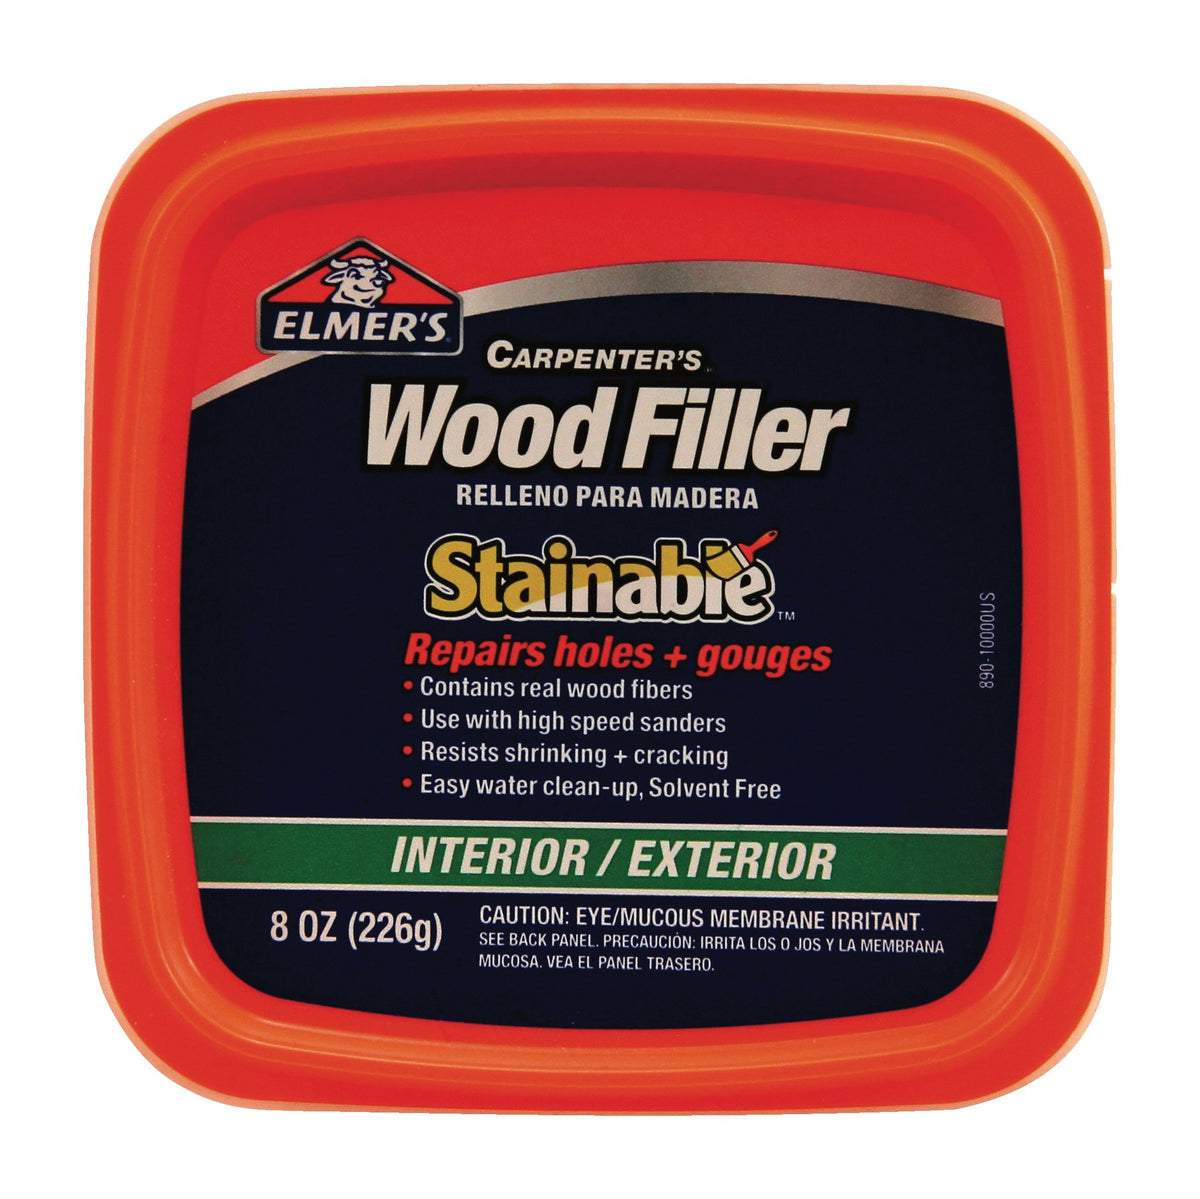 Carpenters Wood Glue - 4 oz